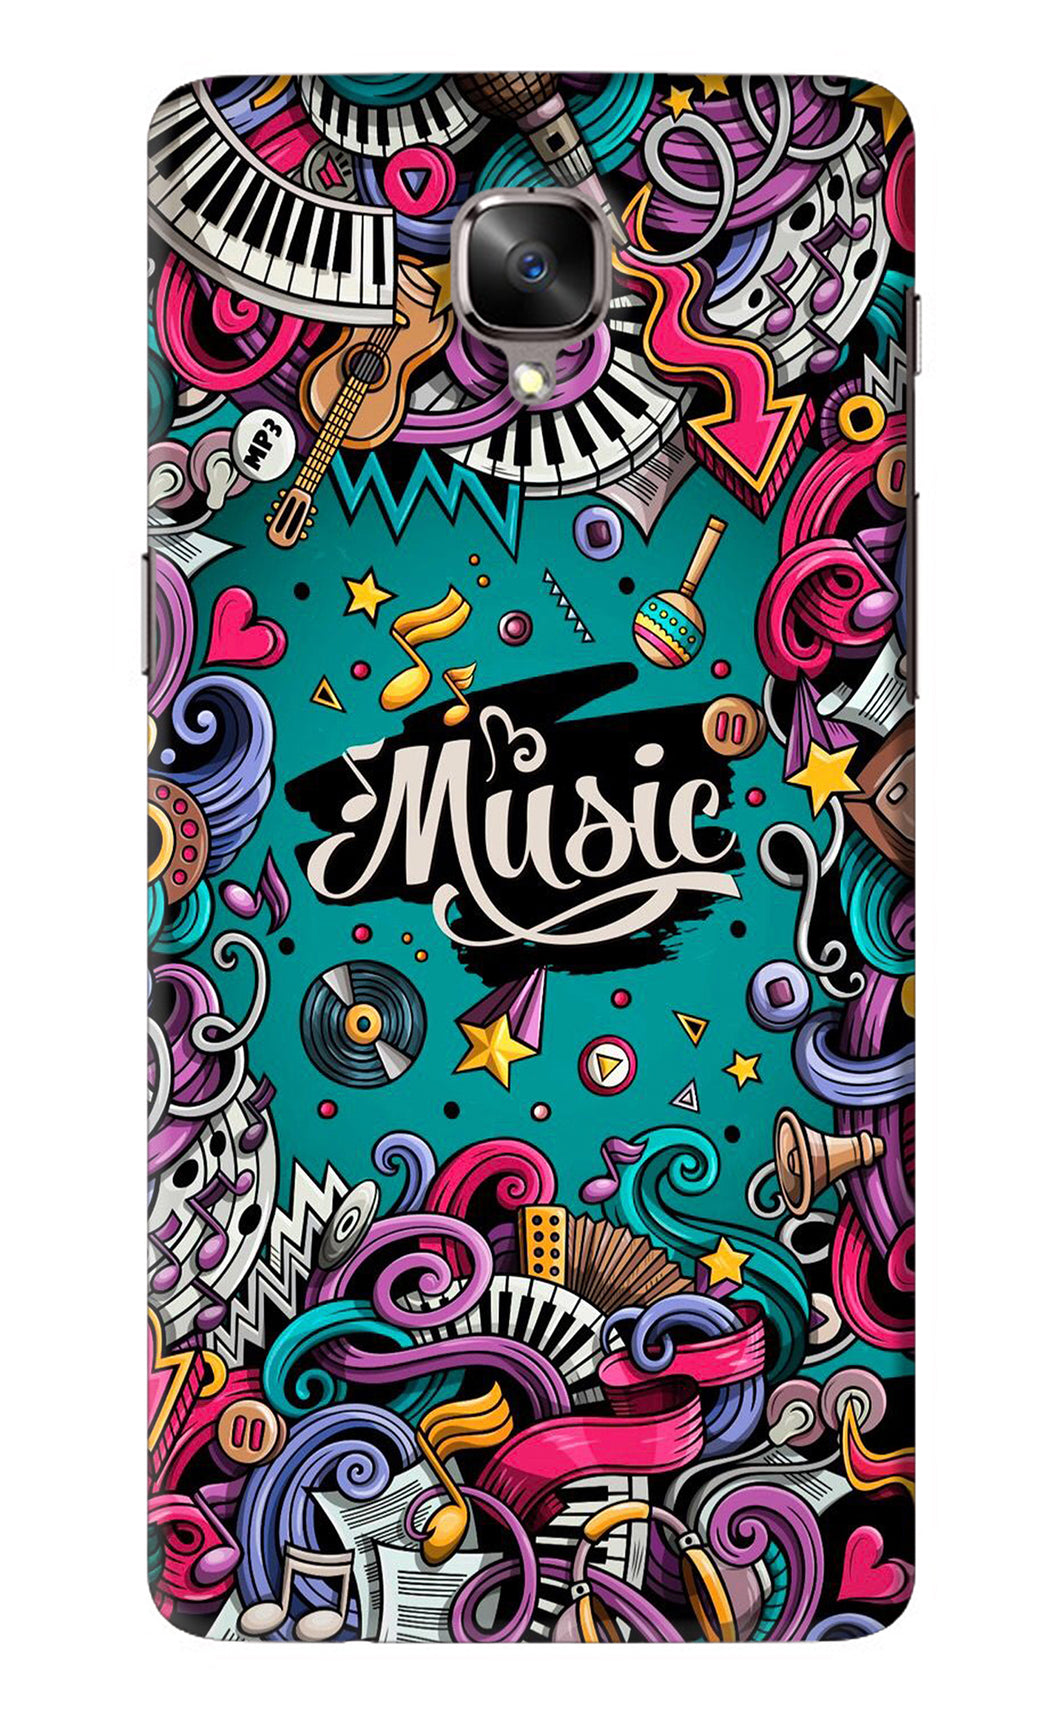 Music Graffiti OnePlus 3 Back Skin Wrap